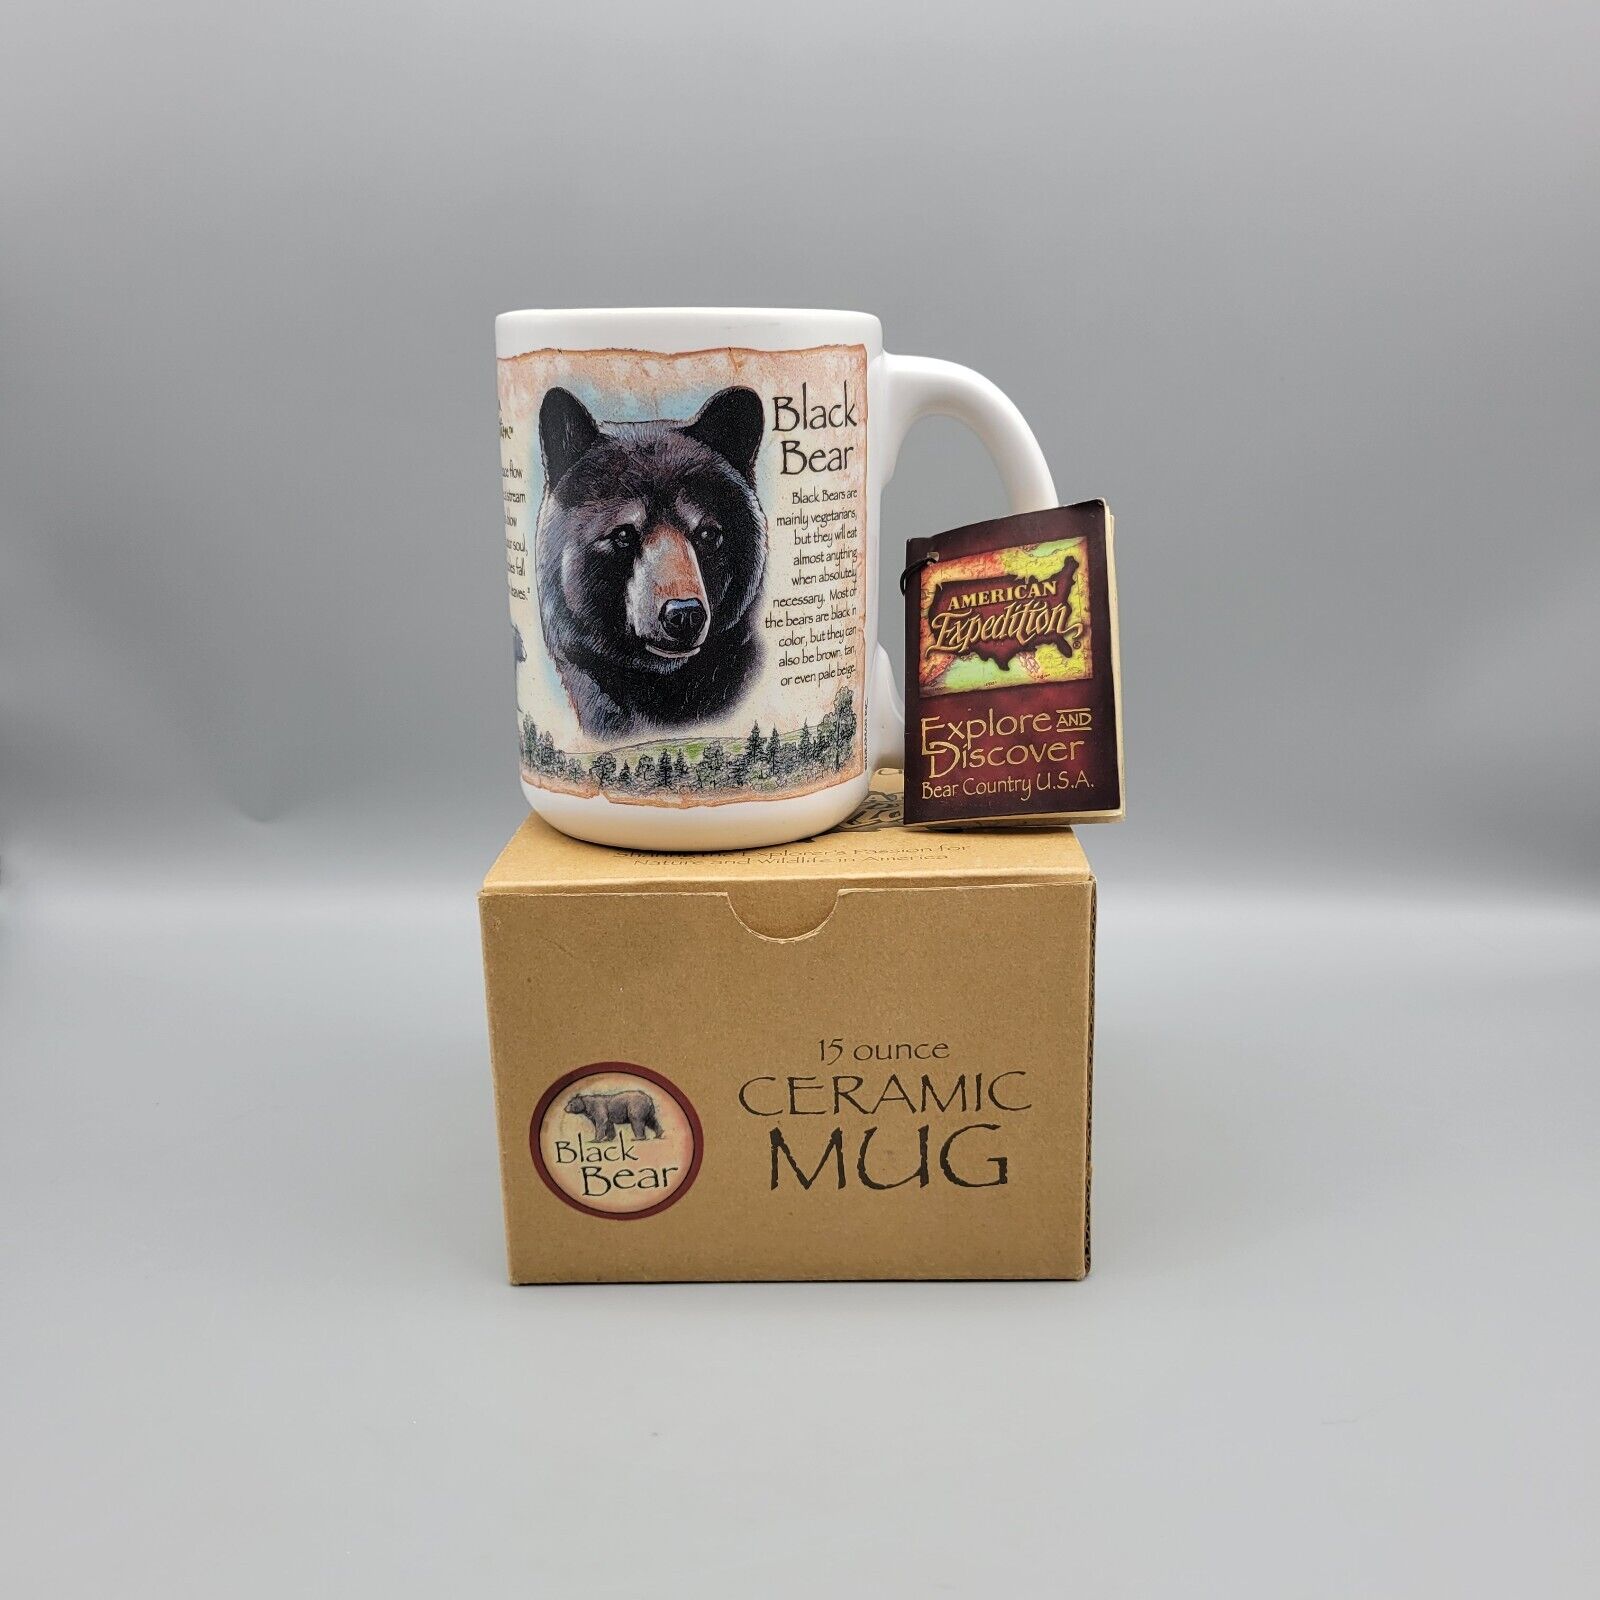 American Expedition Black Bear Coffee Tea Cup Mug 16 oz New In Box Original Tags